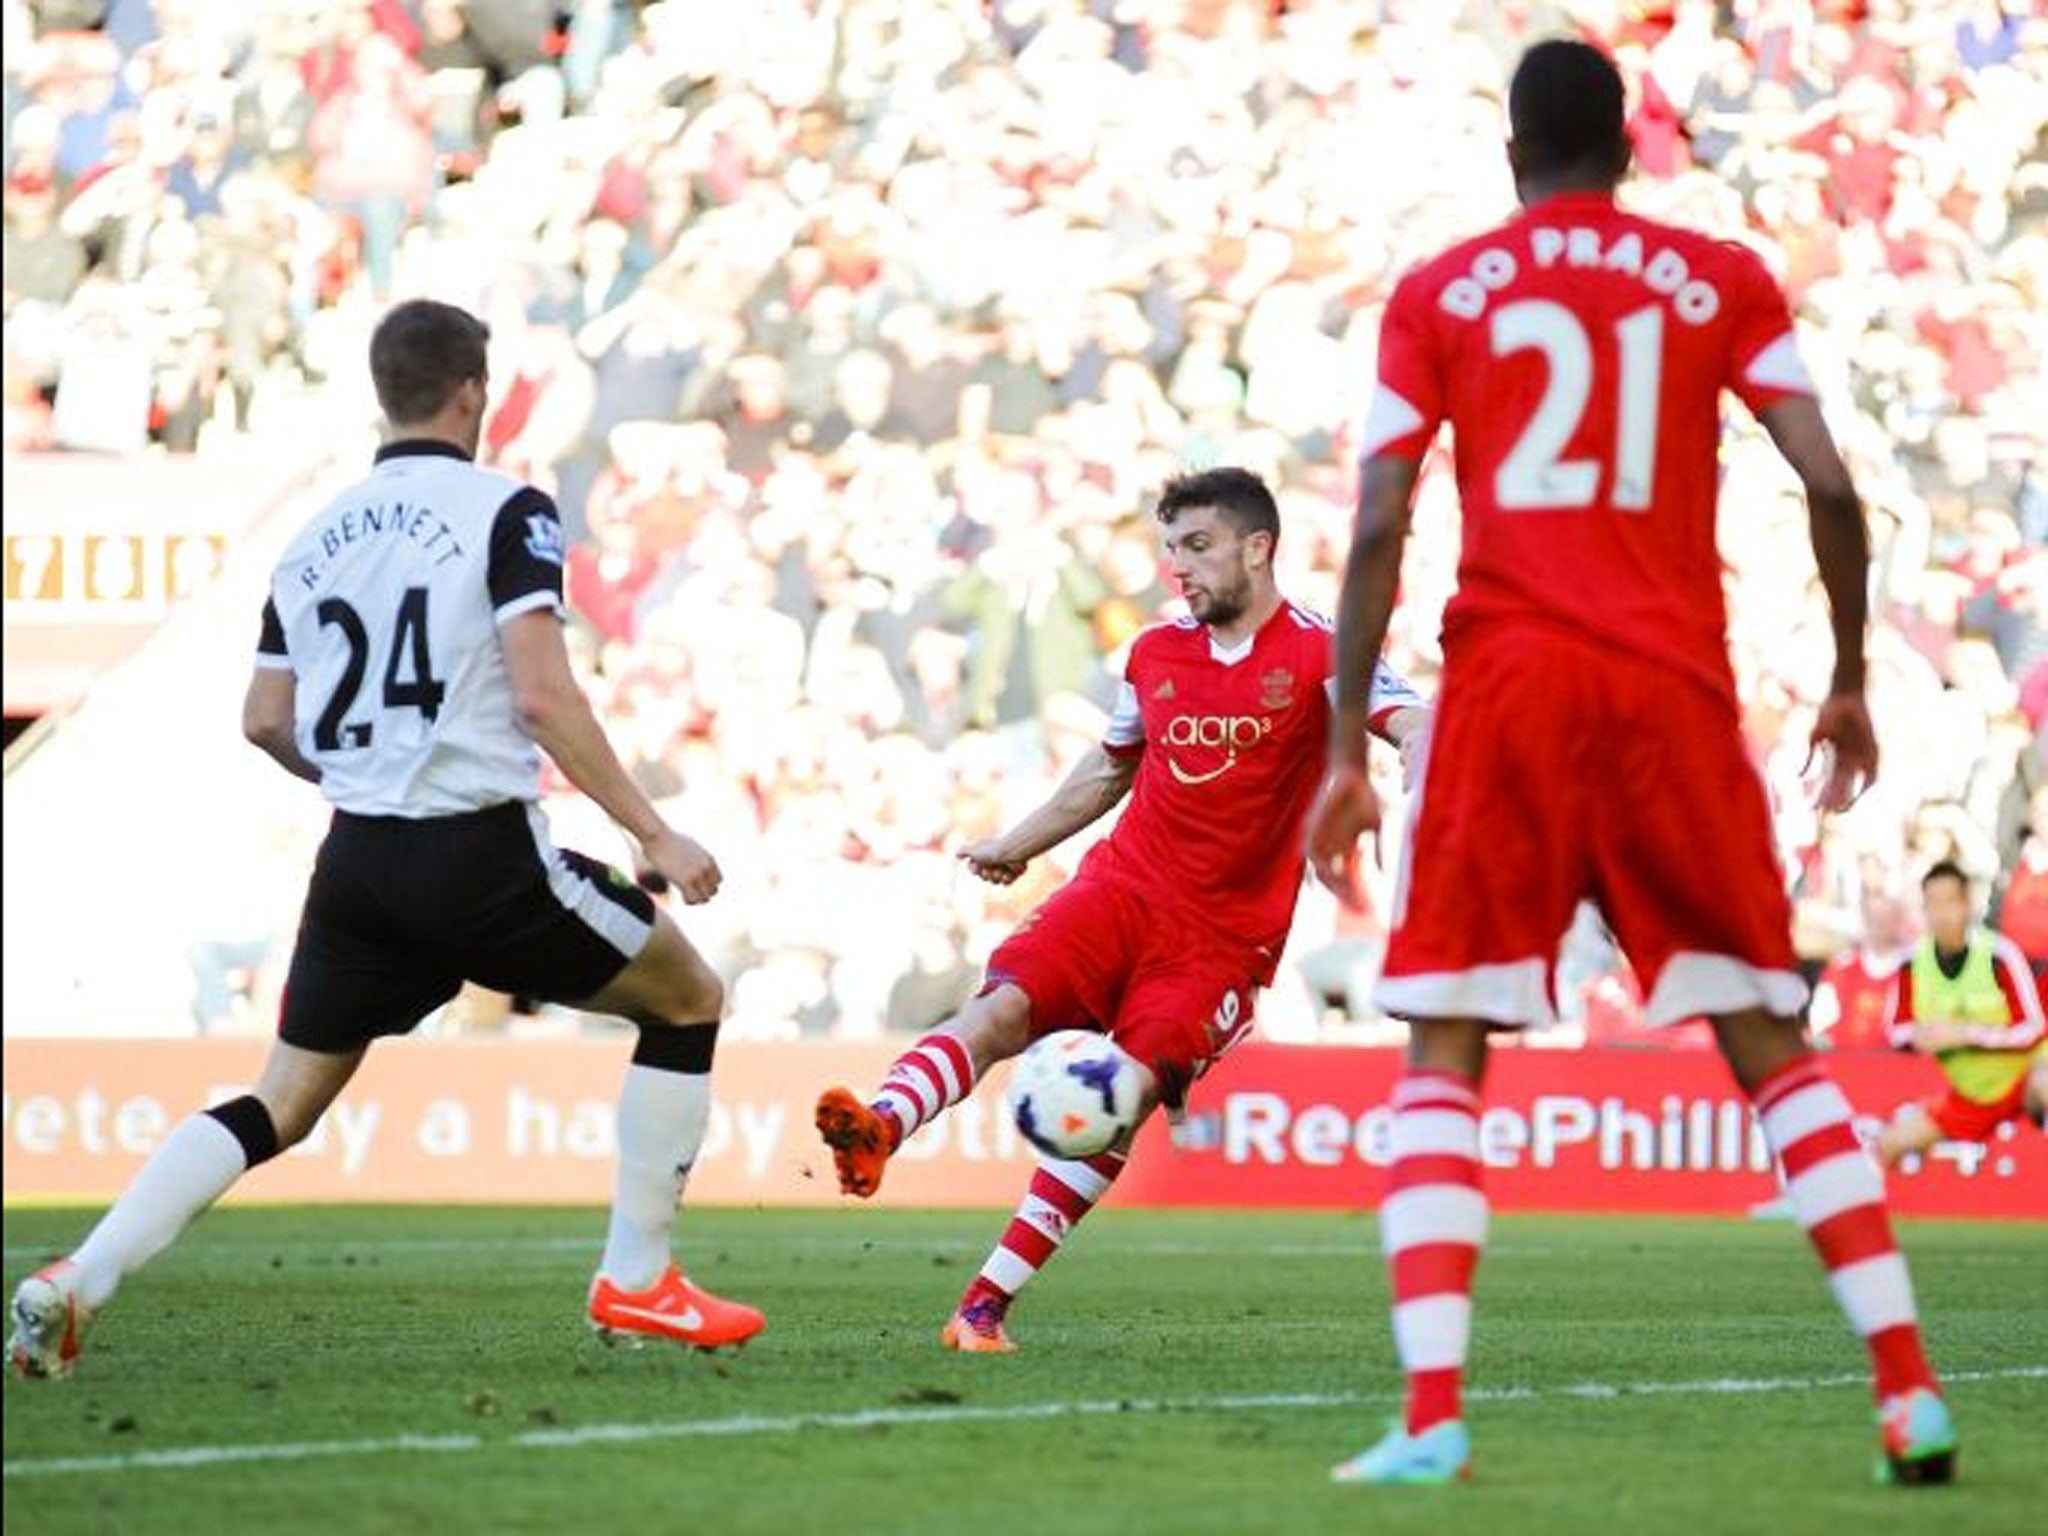 Southampton's Jay Rodriguez scores against Norwich City during the Premier League match at St Marys, Southampton (PA)